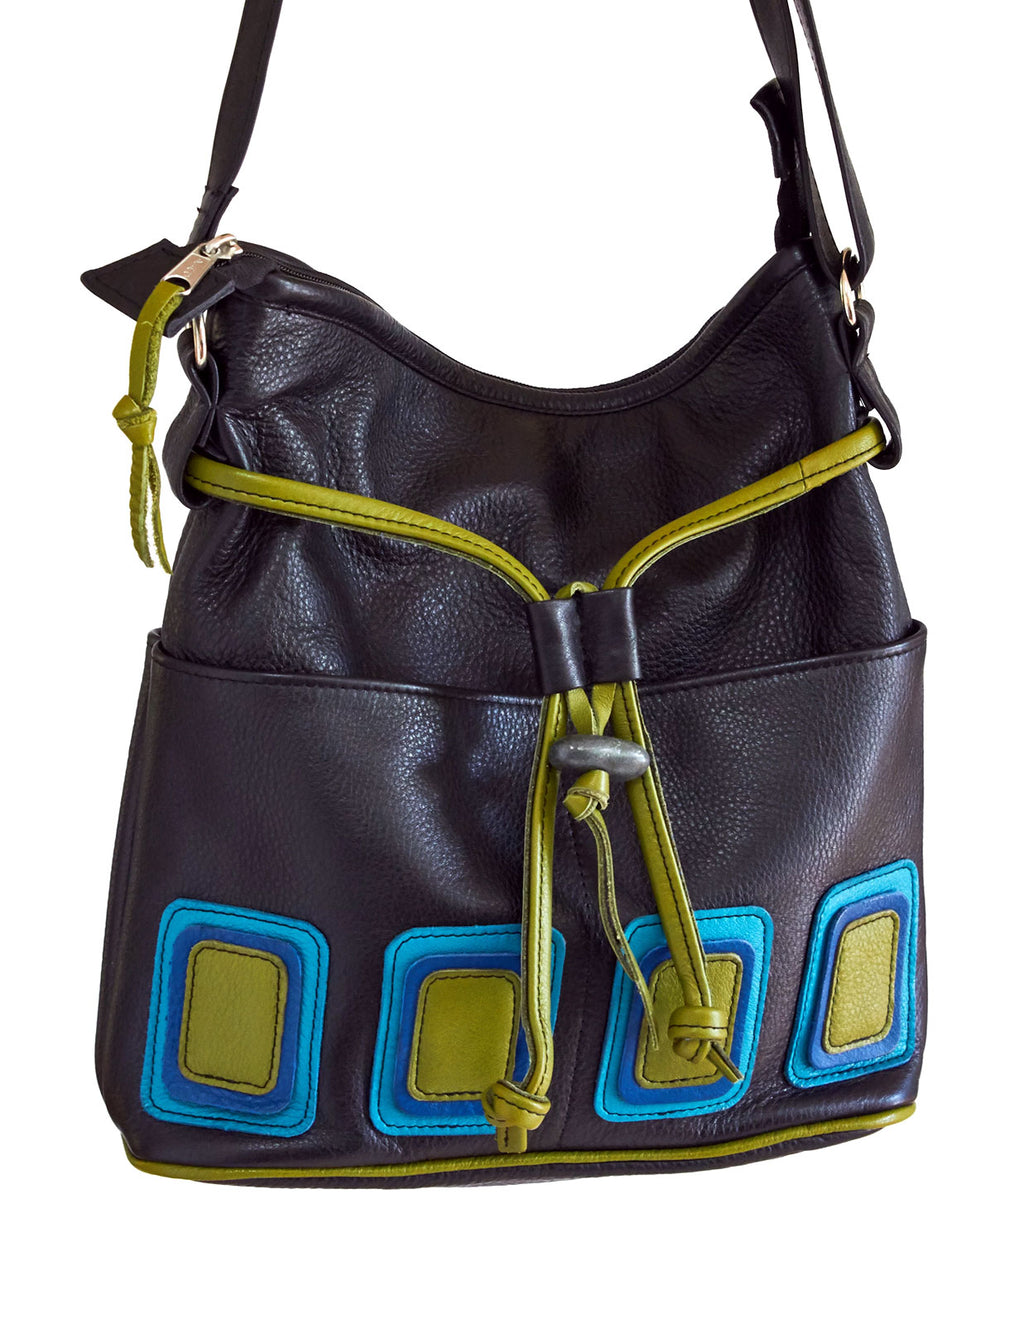 womens crossbody purse Brown crossbody bags for women cross body bag purses:  Handbags: Amazon.com